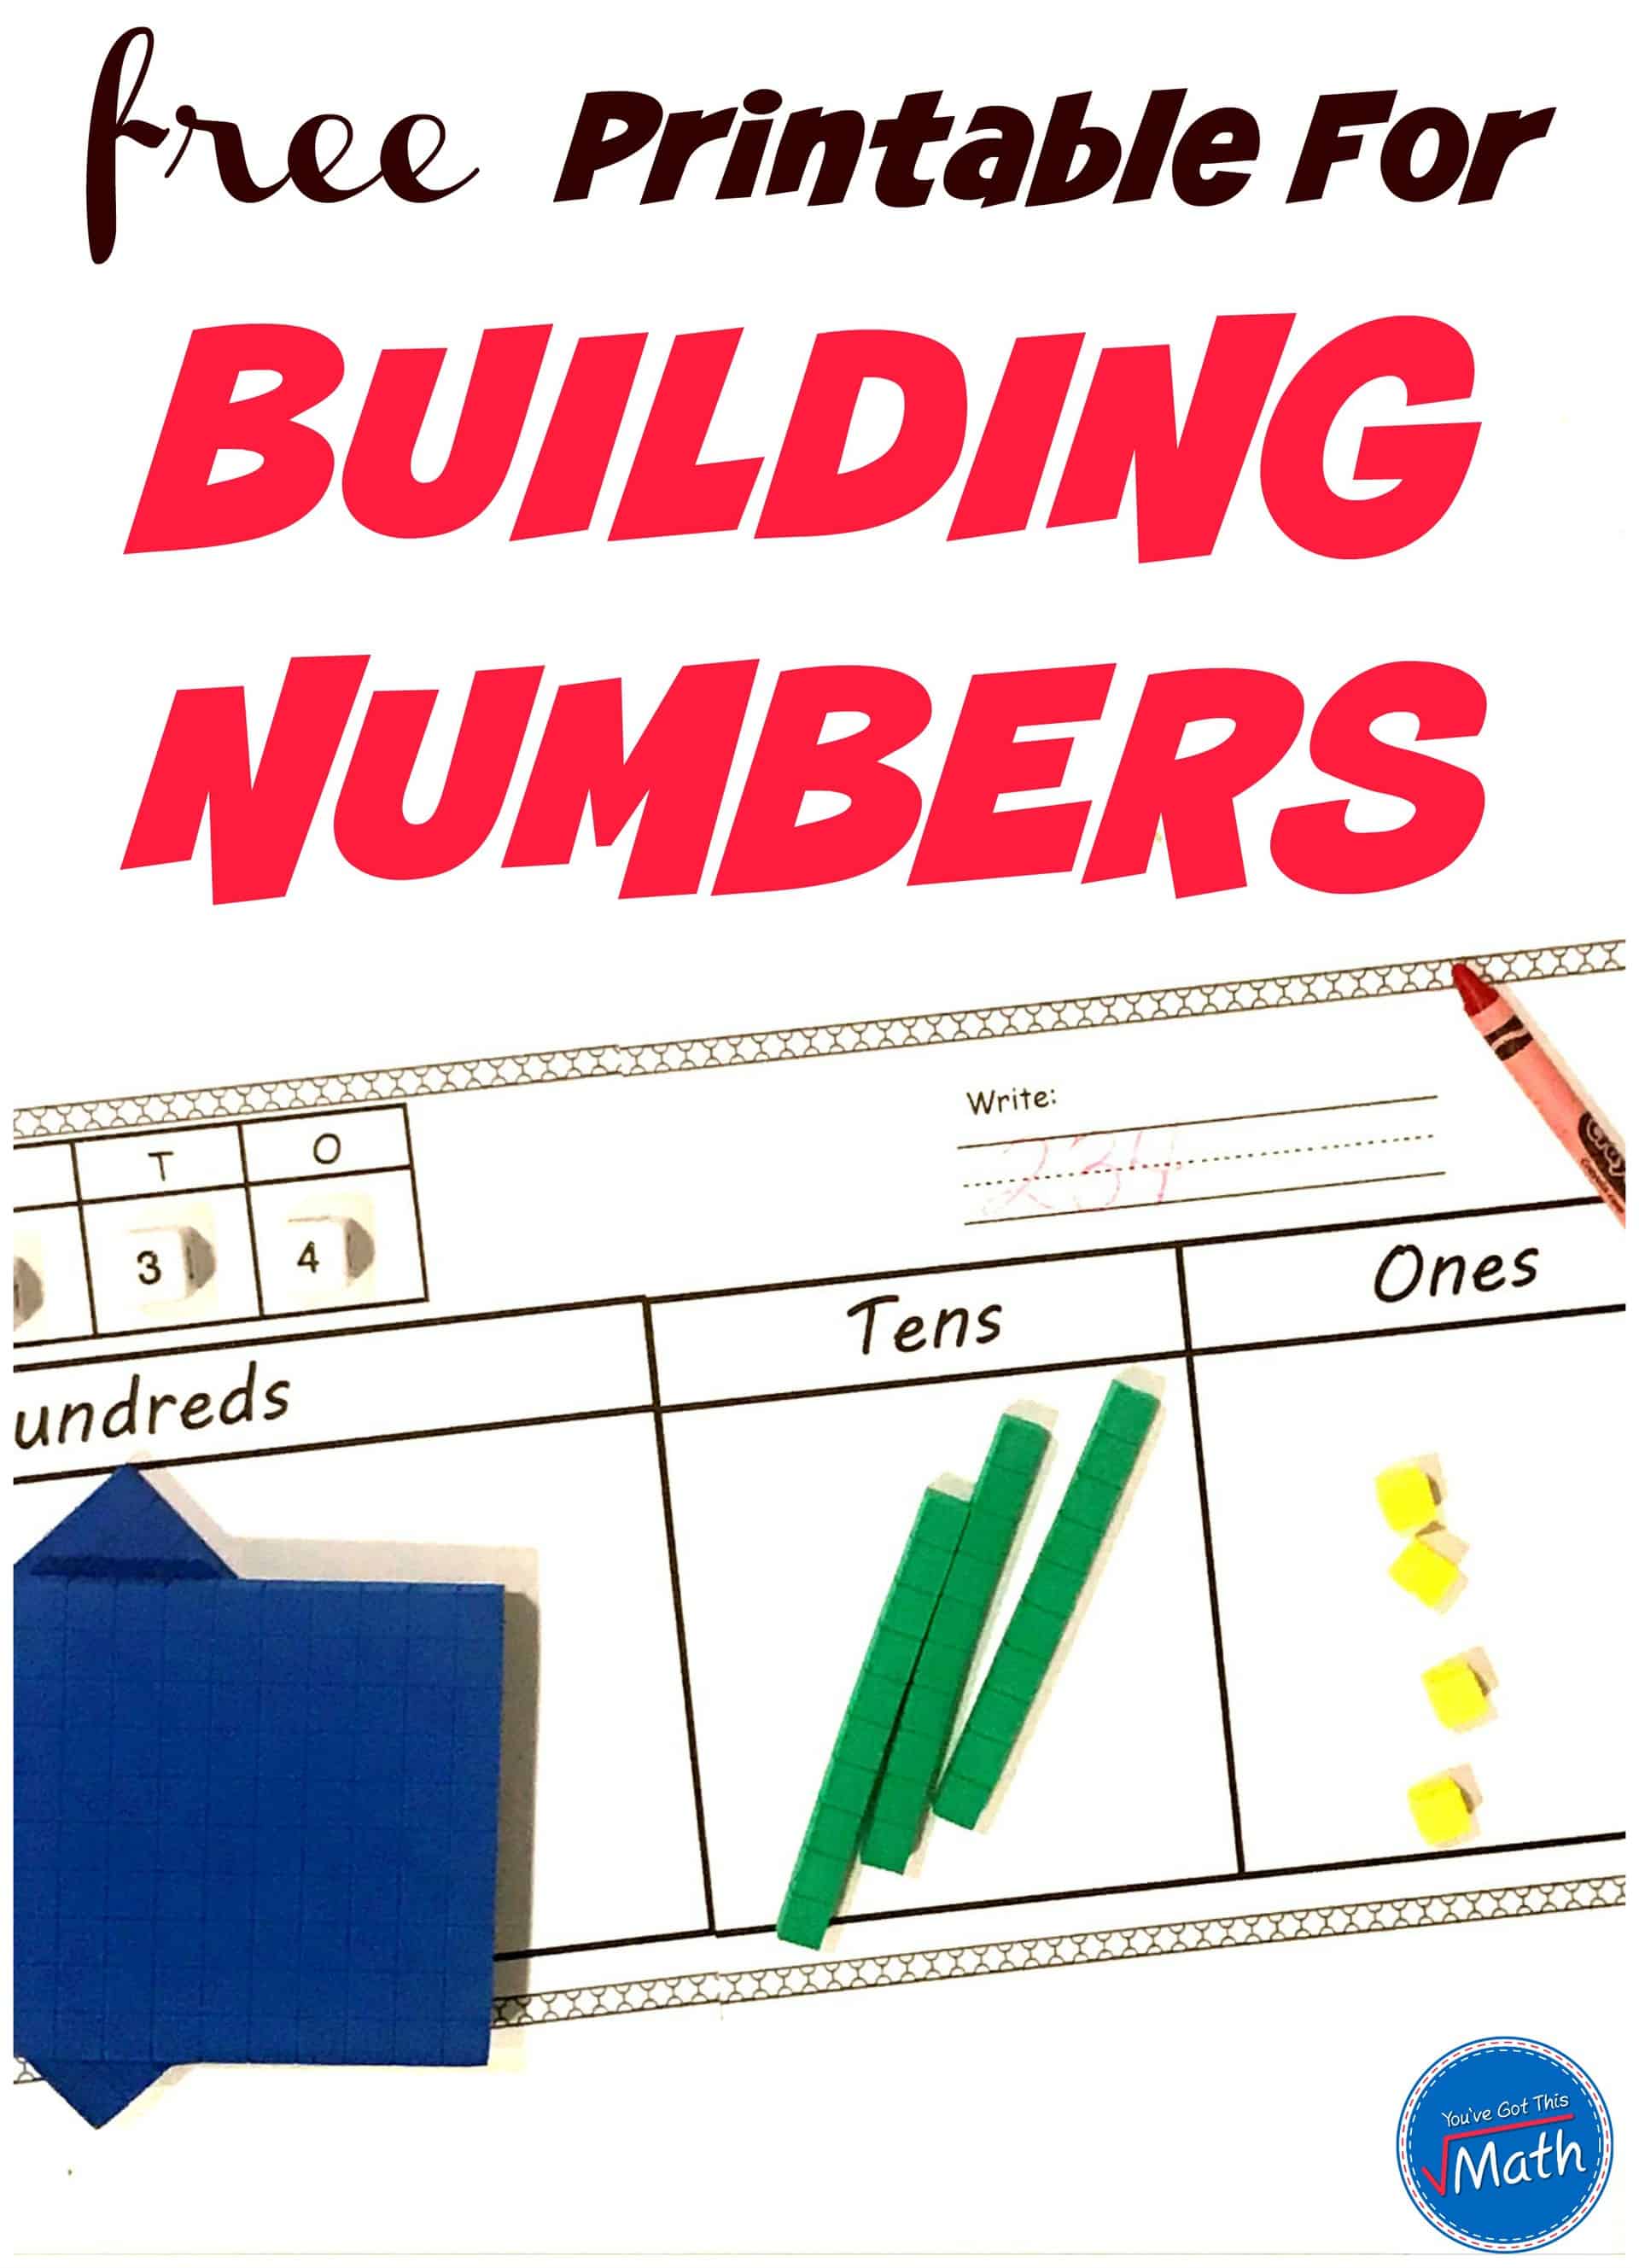 FREE Base Ten Blocks Activity For Building Number Sense